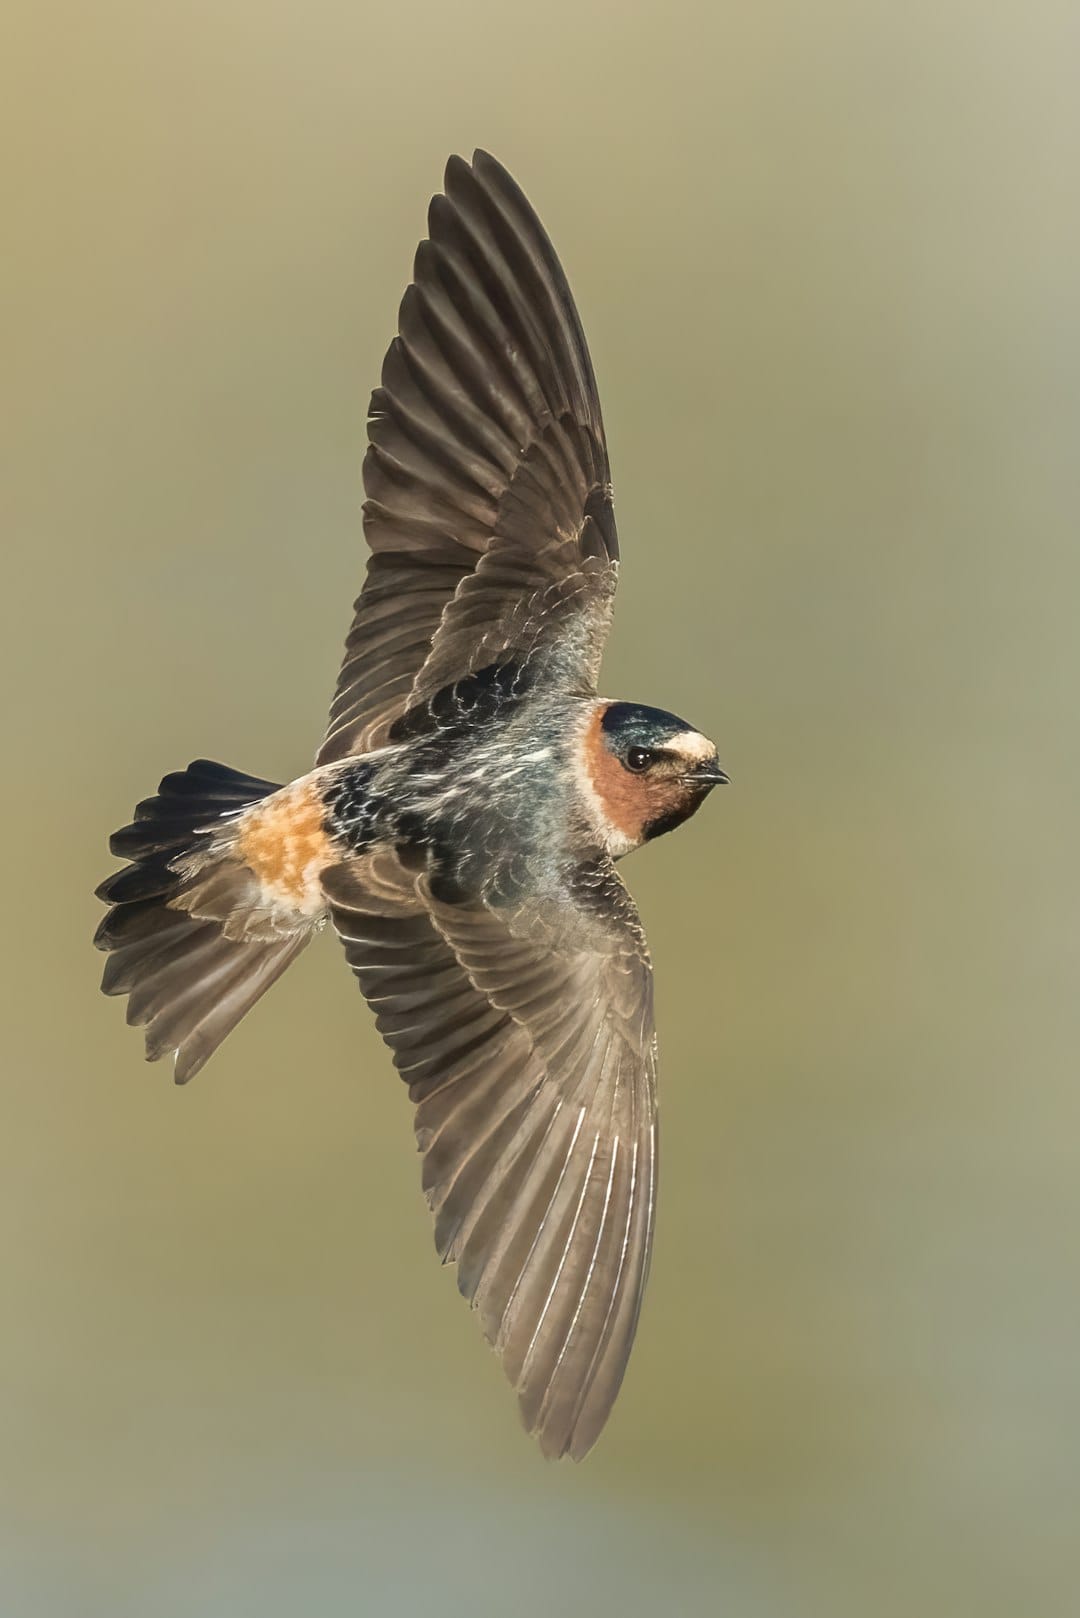 A flying swallow bird